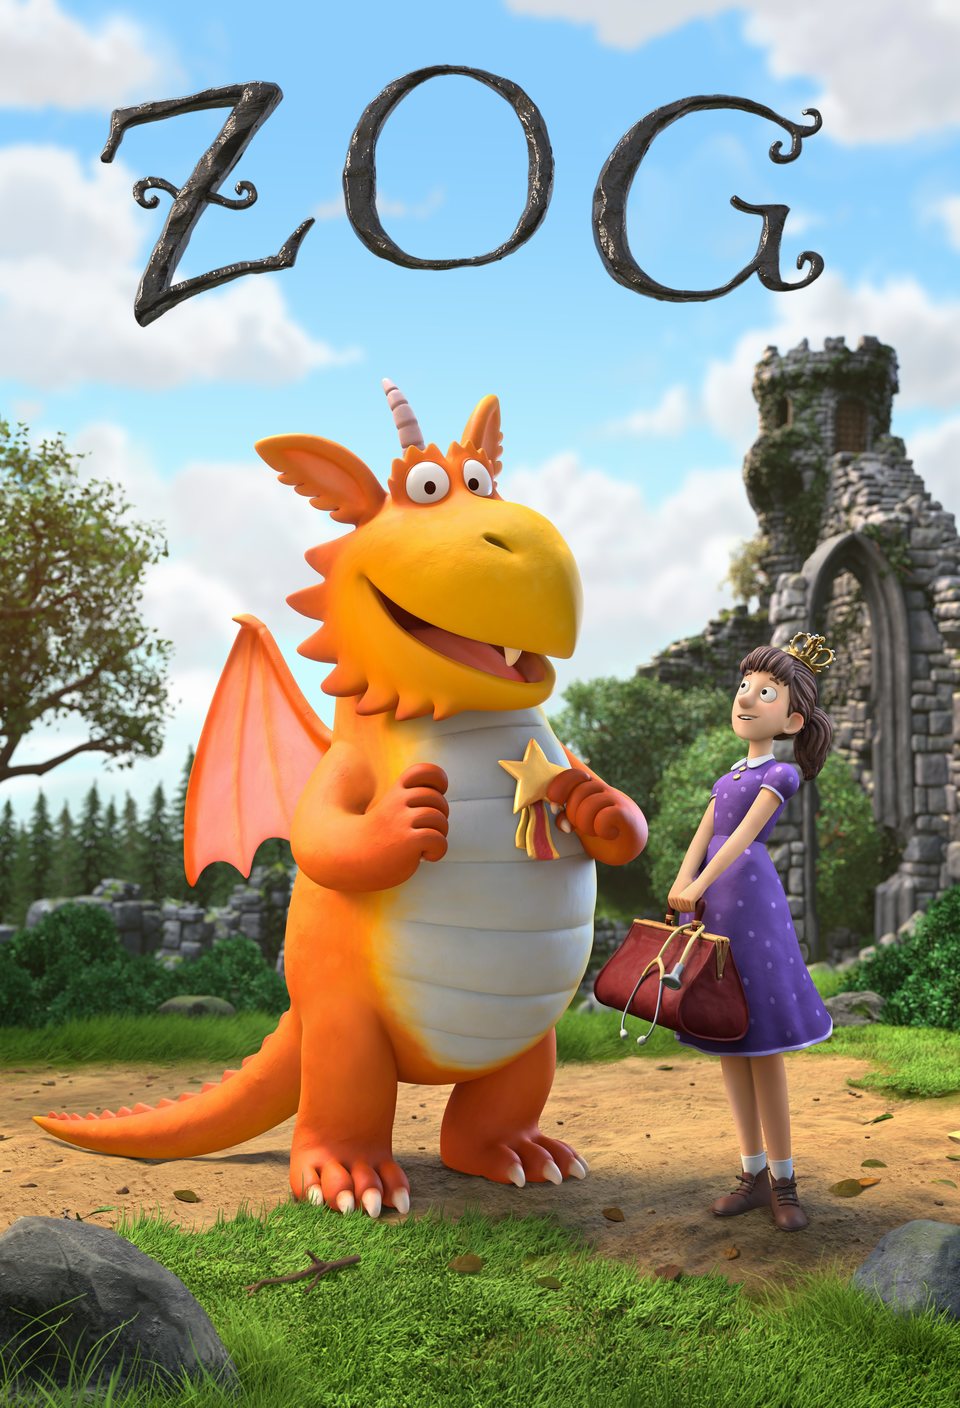 Poster of Zog - Zog